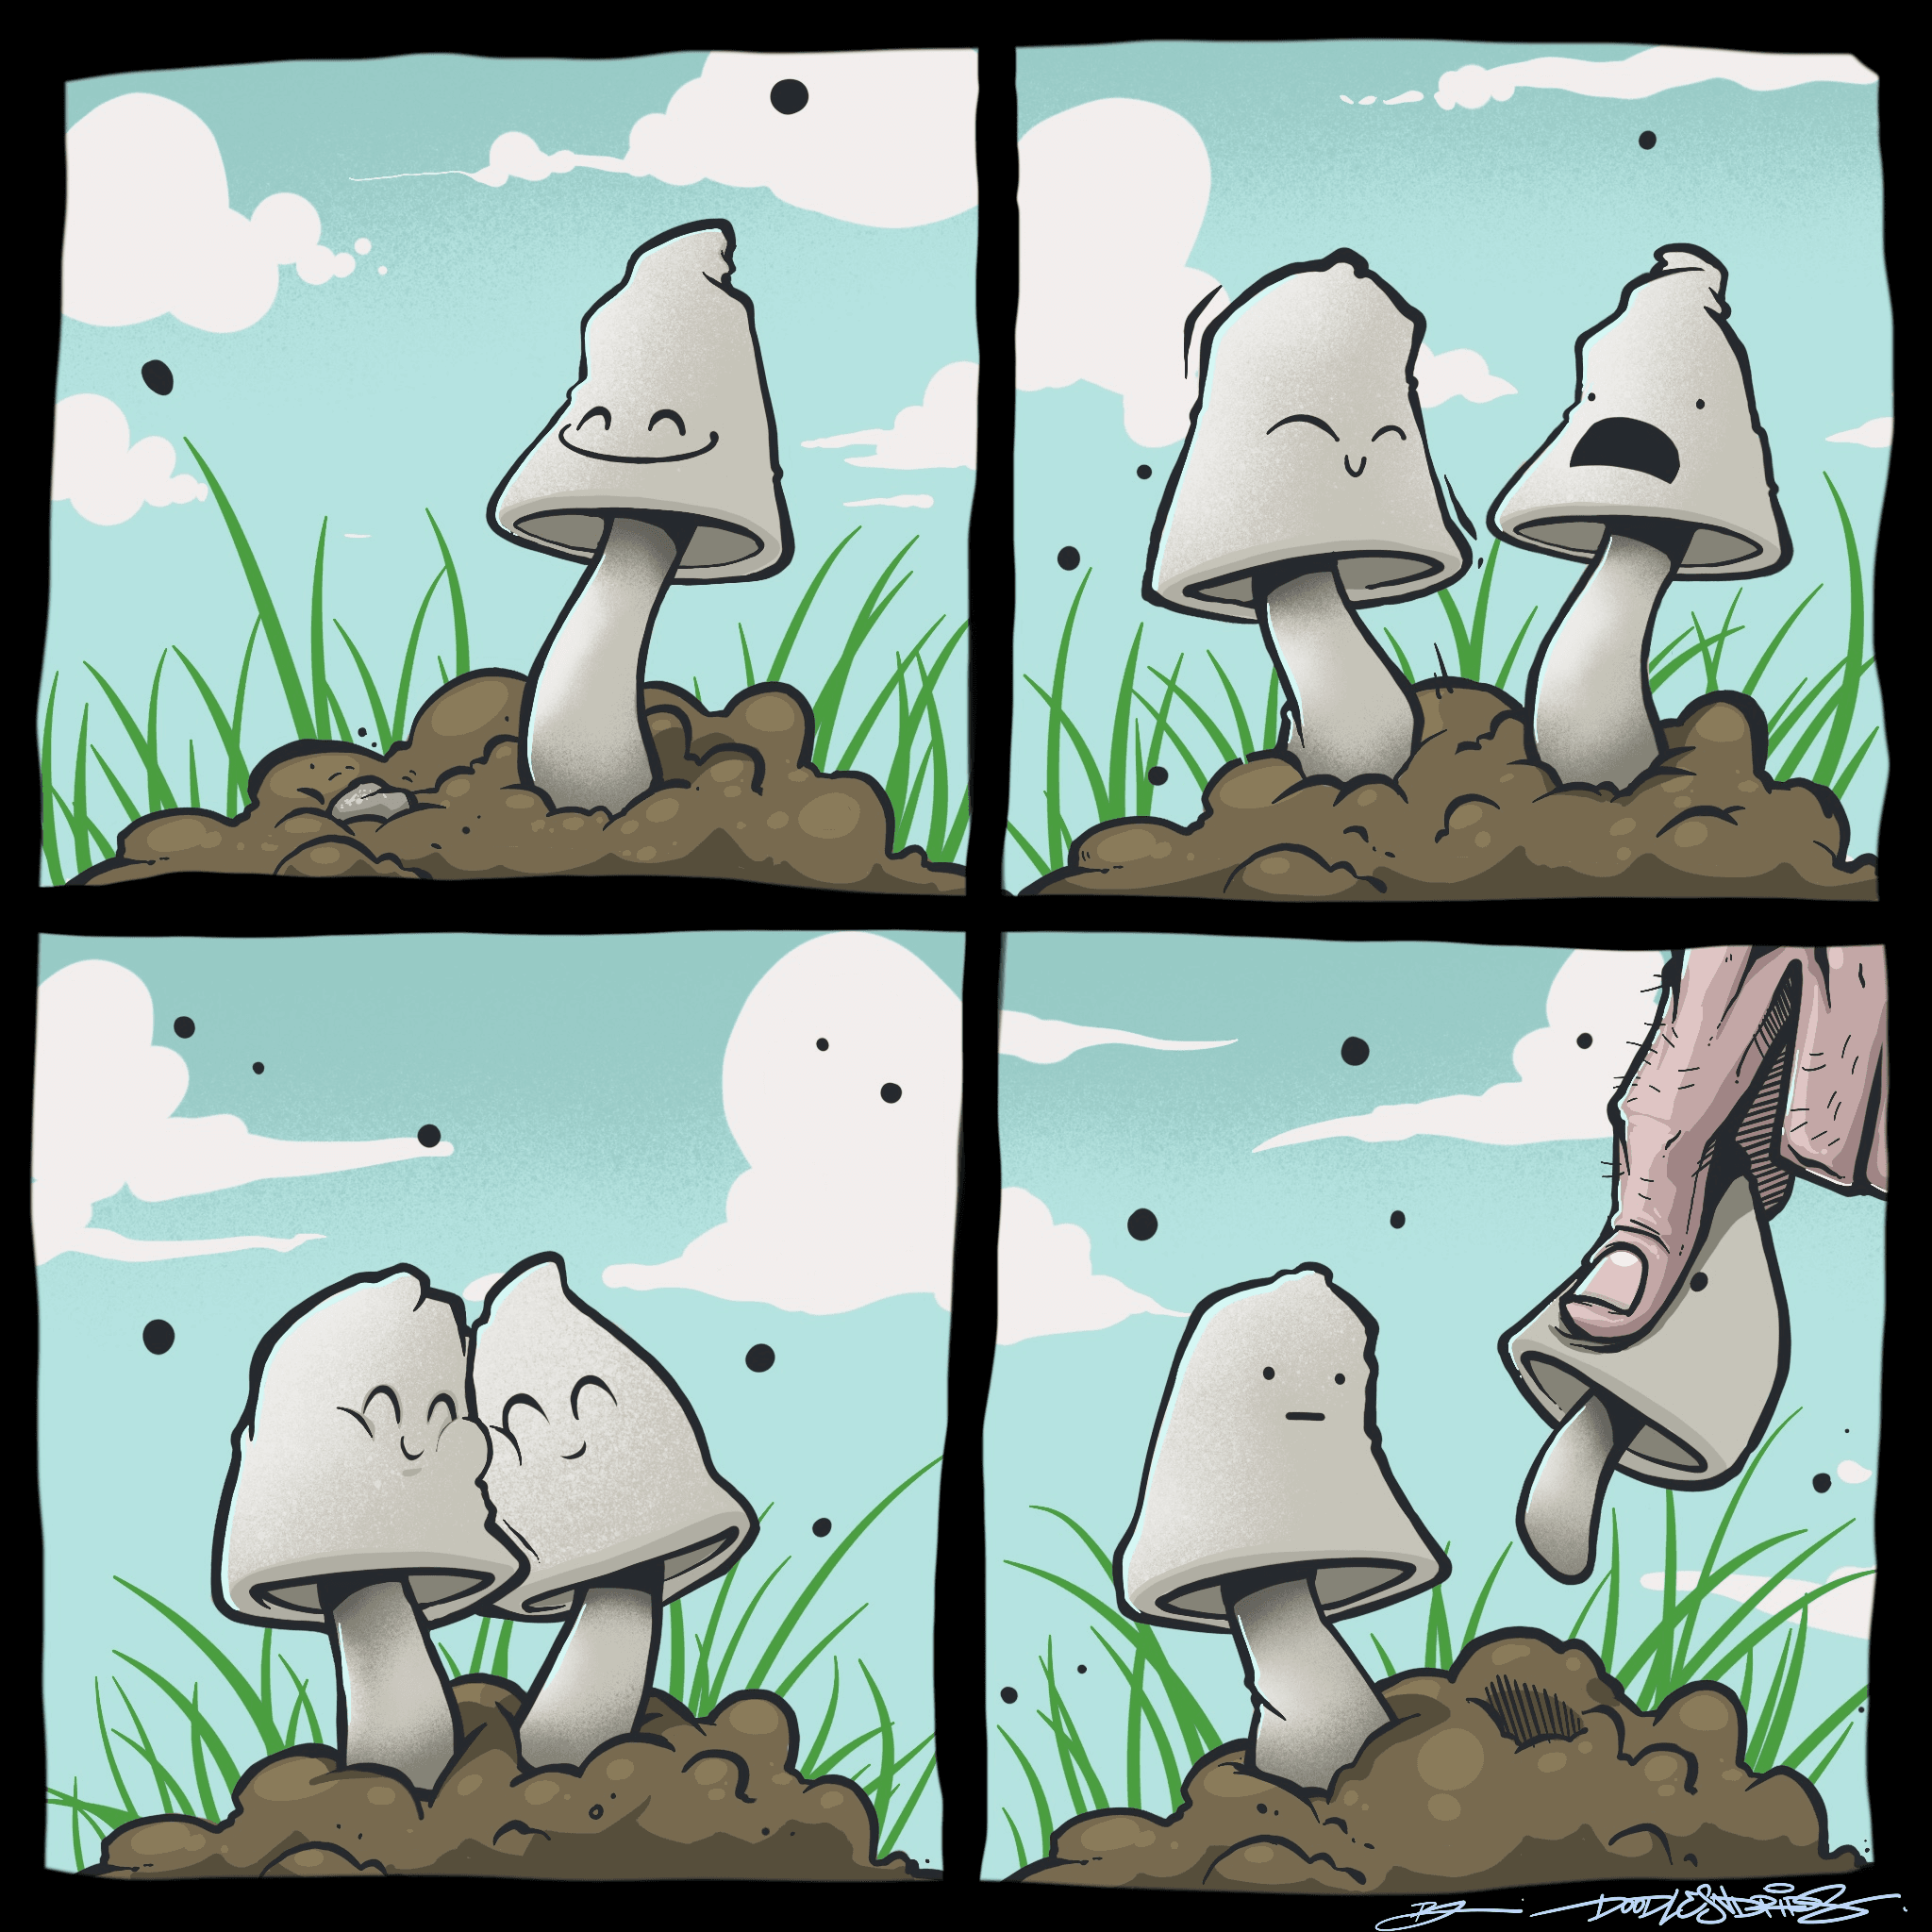 fungalFriends